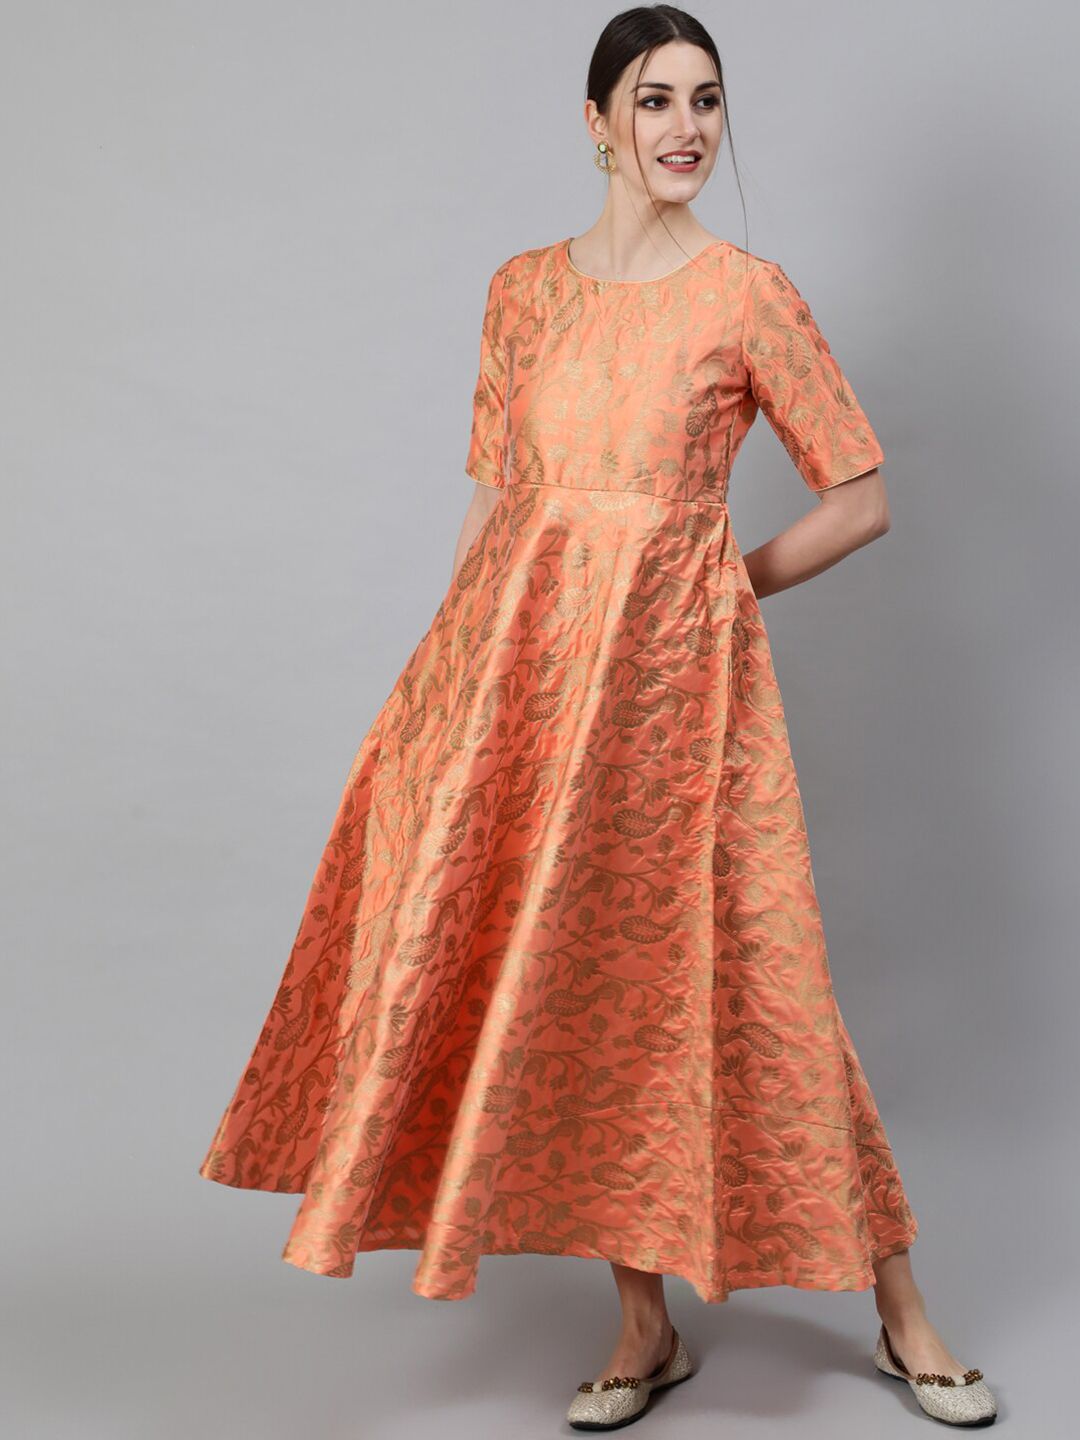 Awadhi Peach-Coloured & Golden Ethnic Motifs Ethnic Maxi Dress Price in India